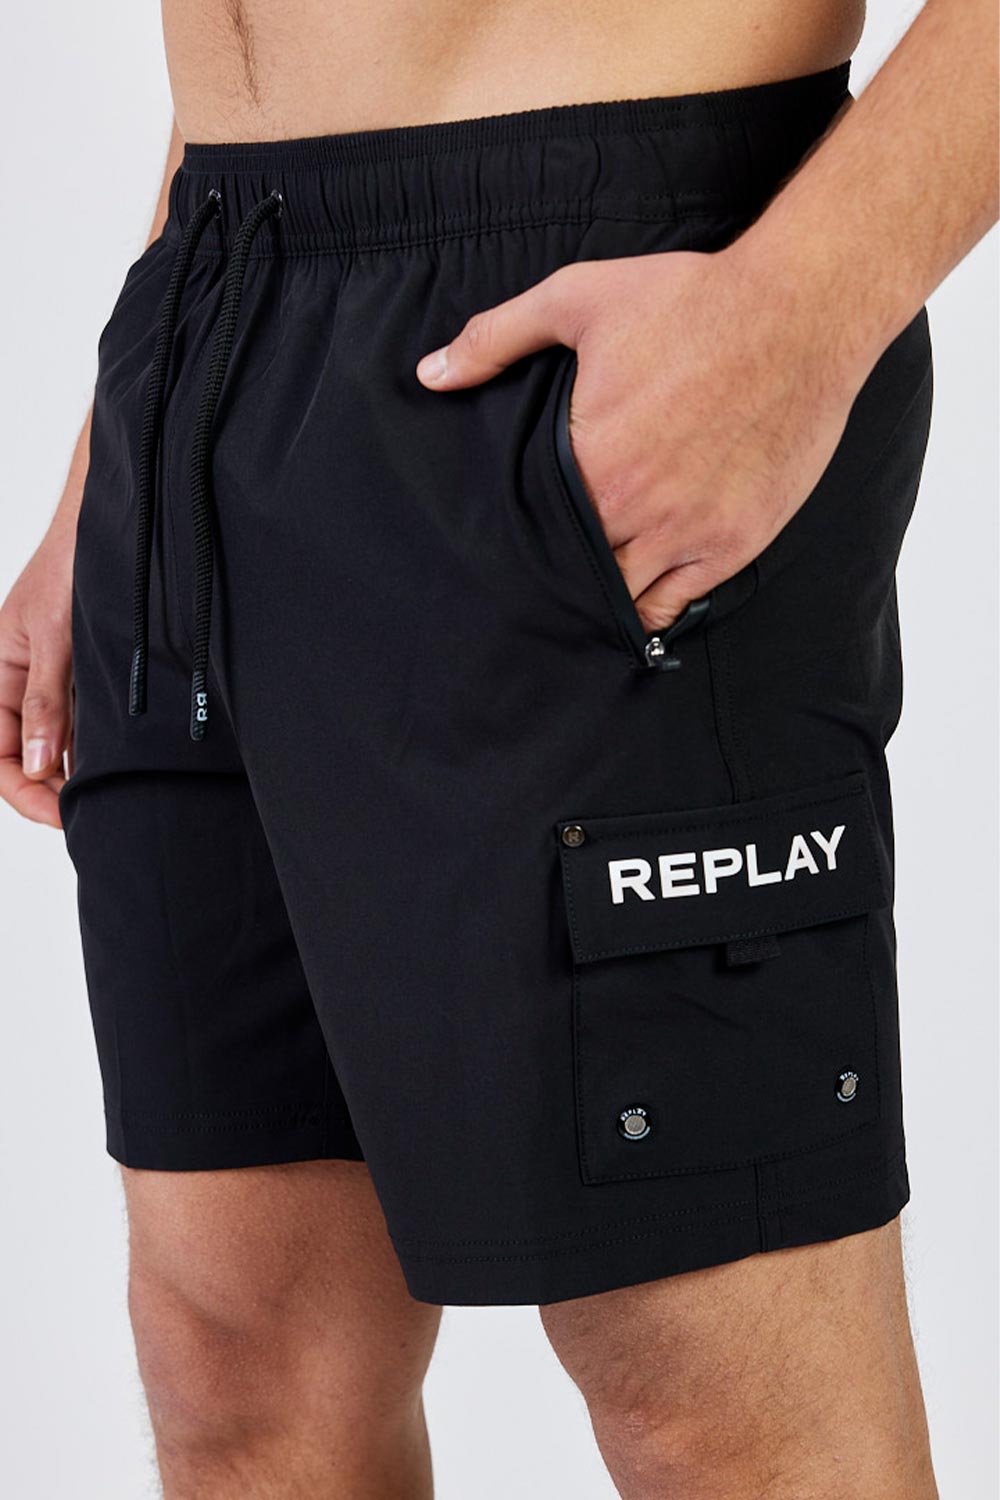 Replay מכנסי ברמודה קצרים בצבע שחור לגברים-Replay-S-נאקו